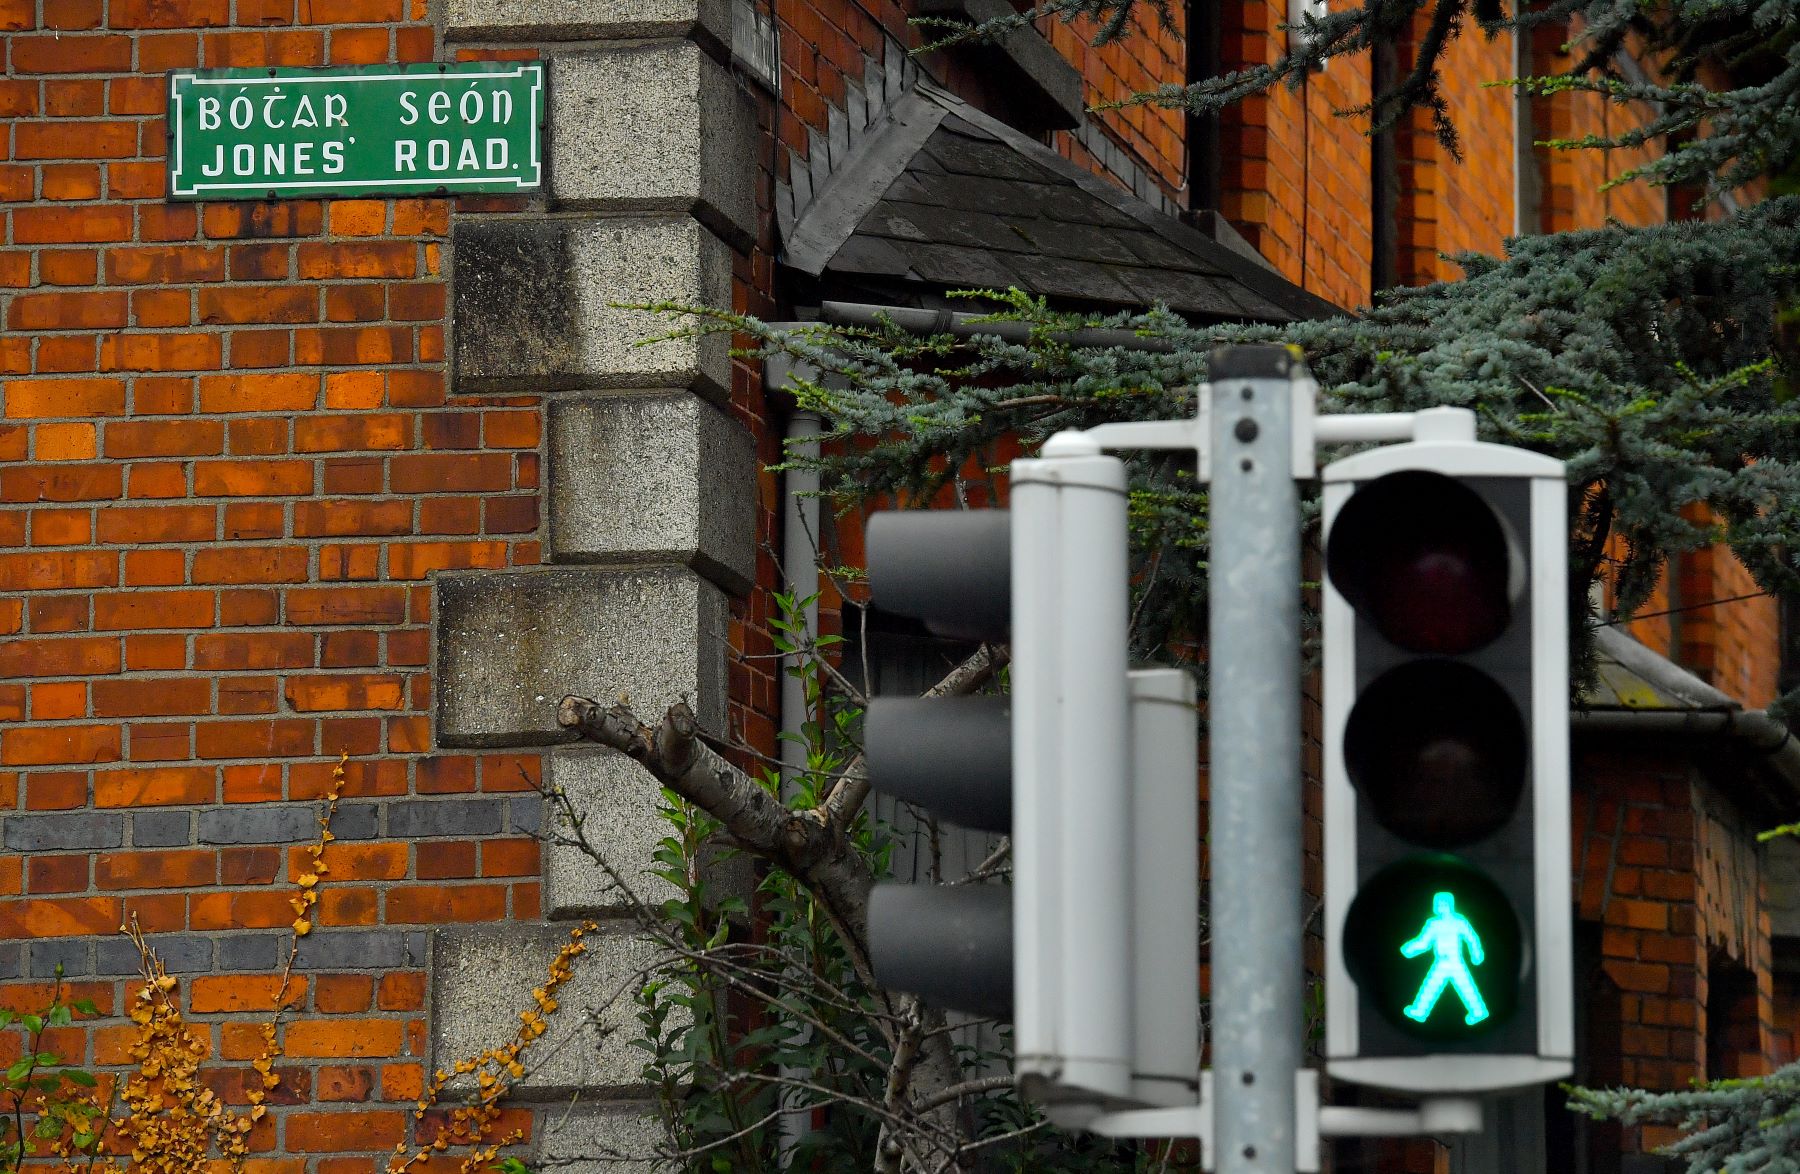 A traffic light with a green walk signal on Jones' Road near Croke Park Stadium in Dublin, Ireland